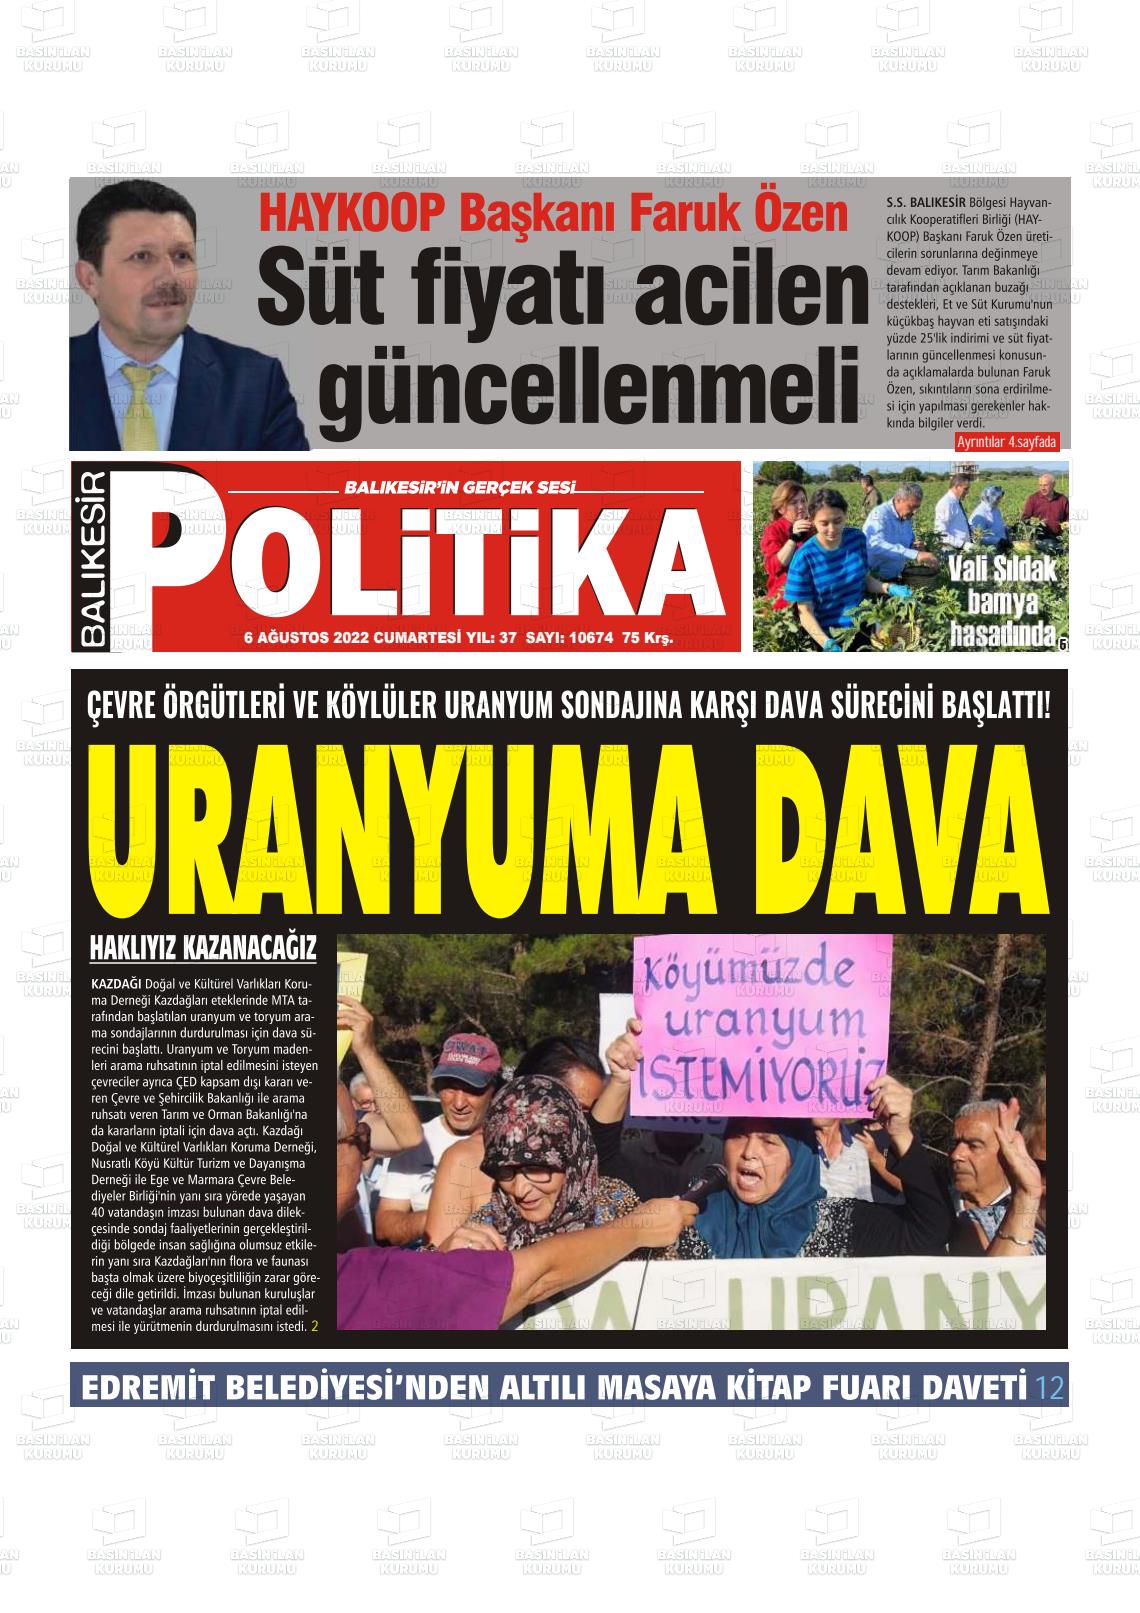 06 Ağustos 2022 Balıkesir Politika Gazete Manşeti